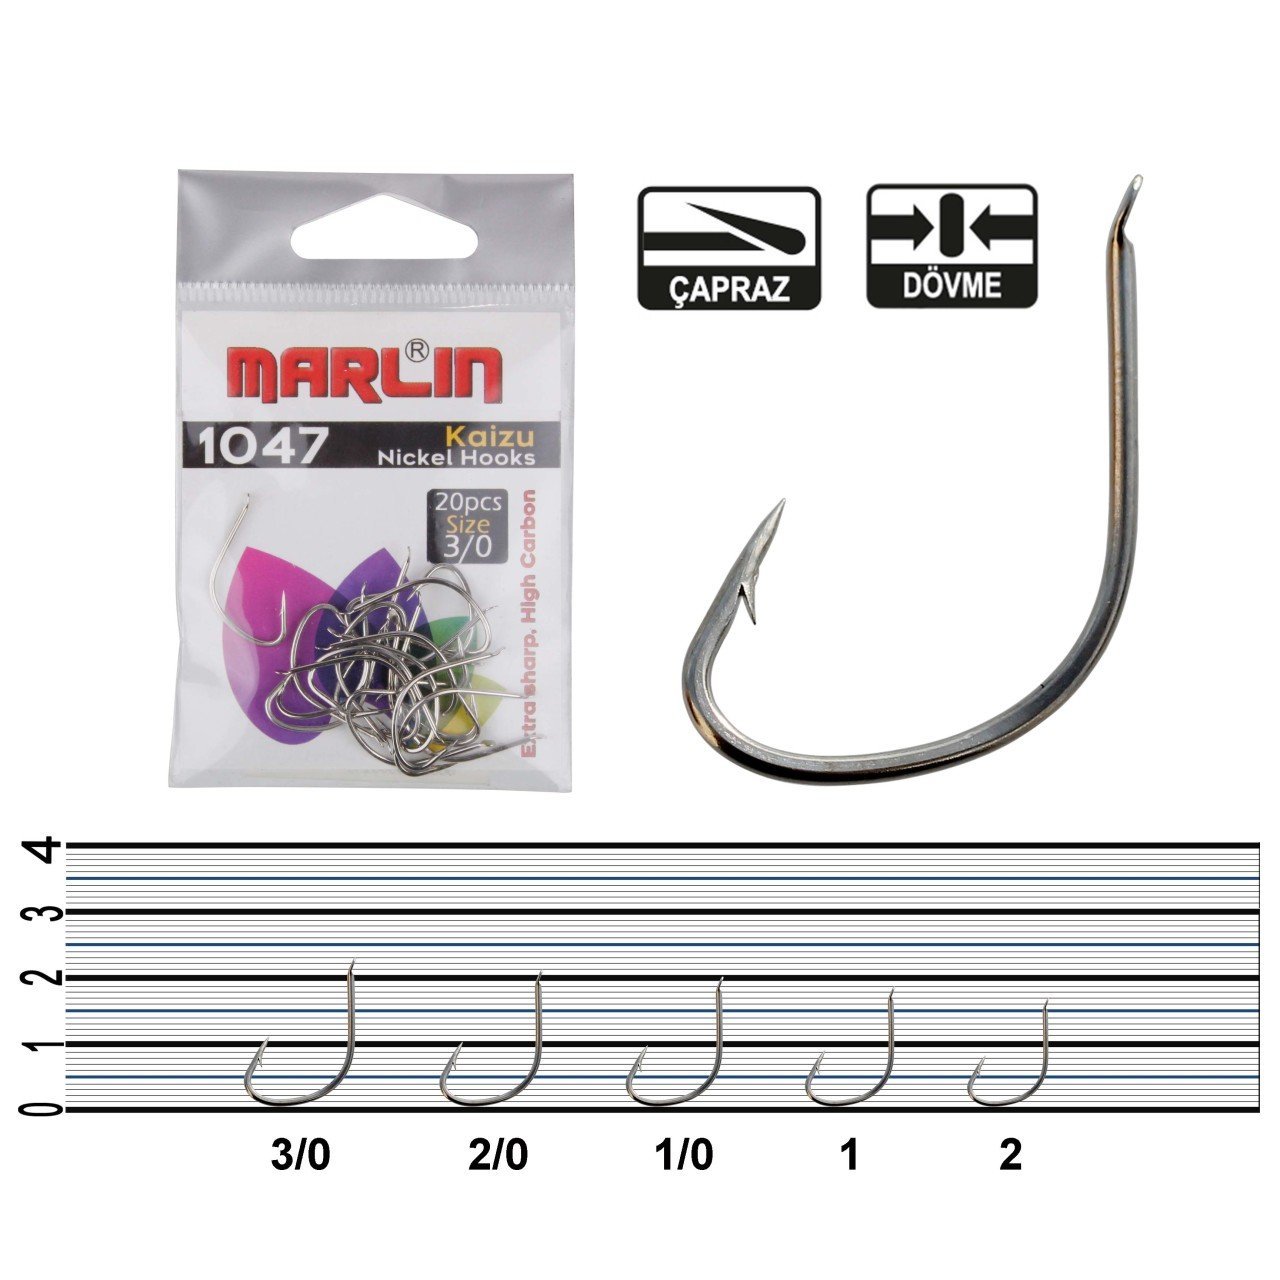 Marlin 1047 Kaizu-T HC Nickel İğne No:3/0 (20Pcs)